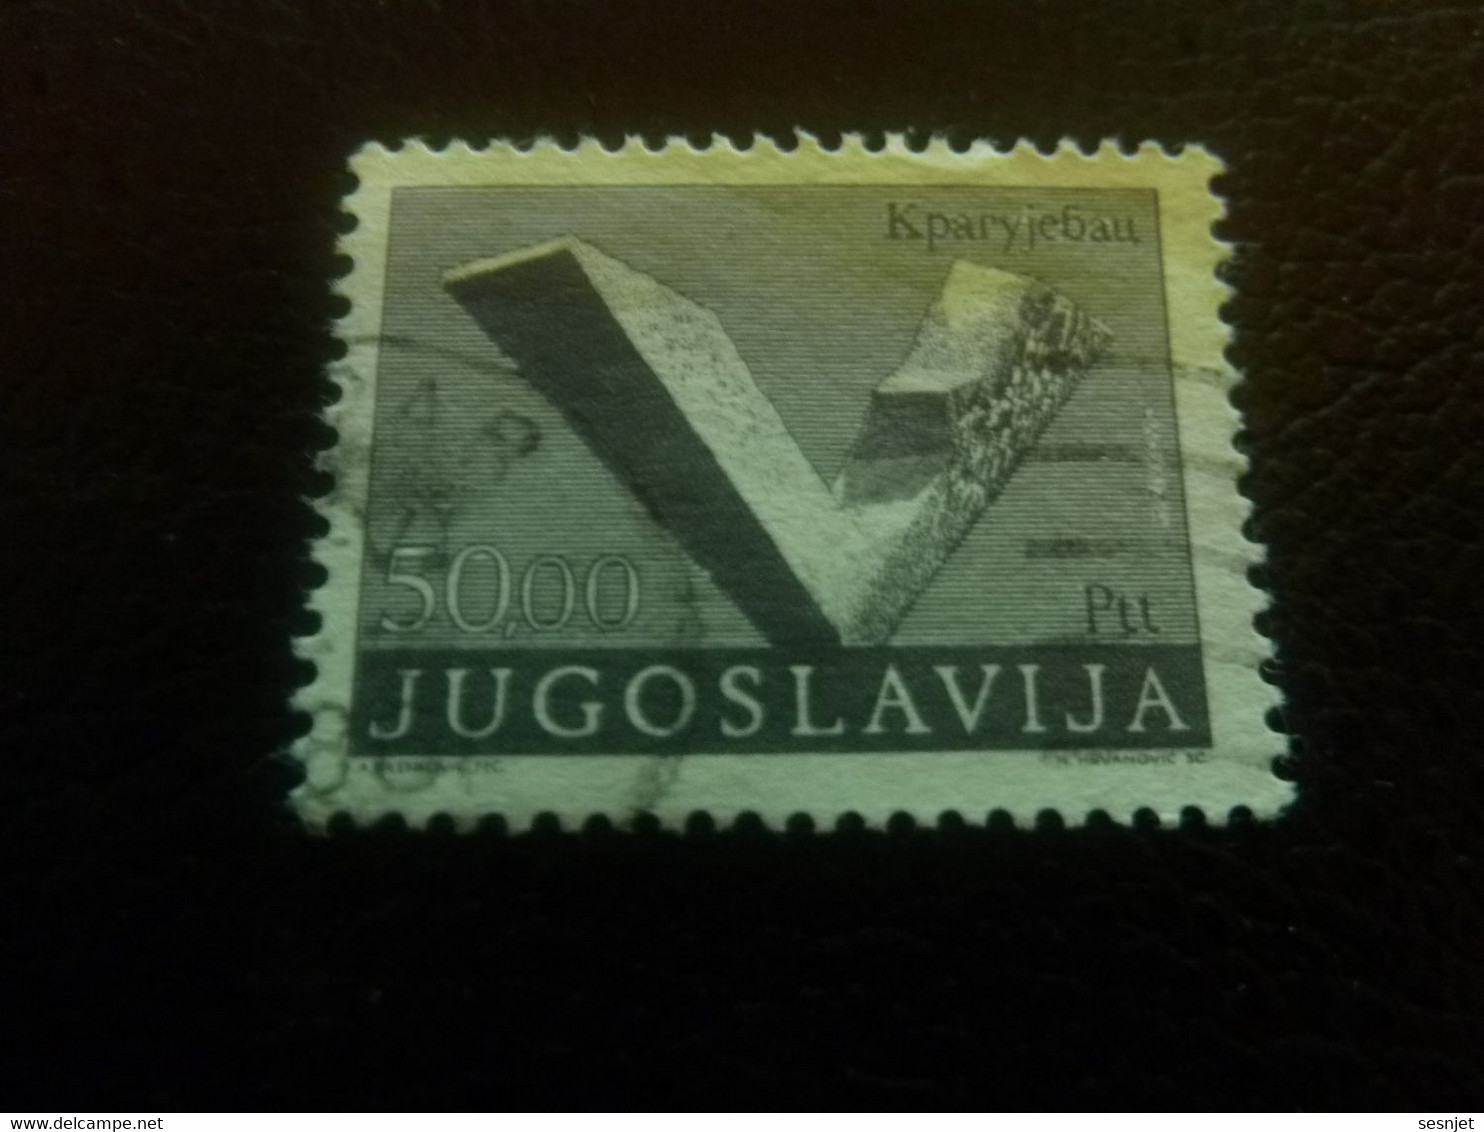 Ptt - Jugoslavija - Kparyjebau - Val 50.00 - Gris-noir - Oblitéré - - Used Stamps